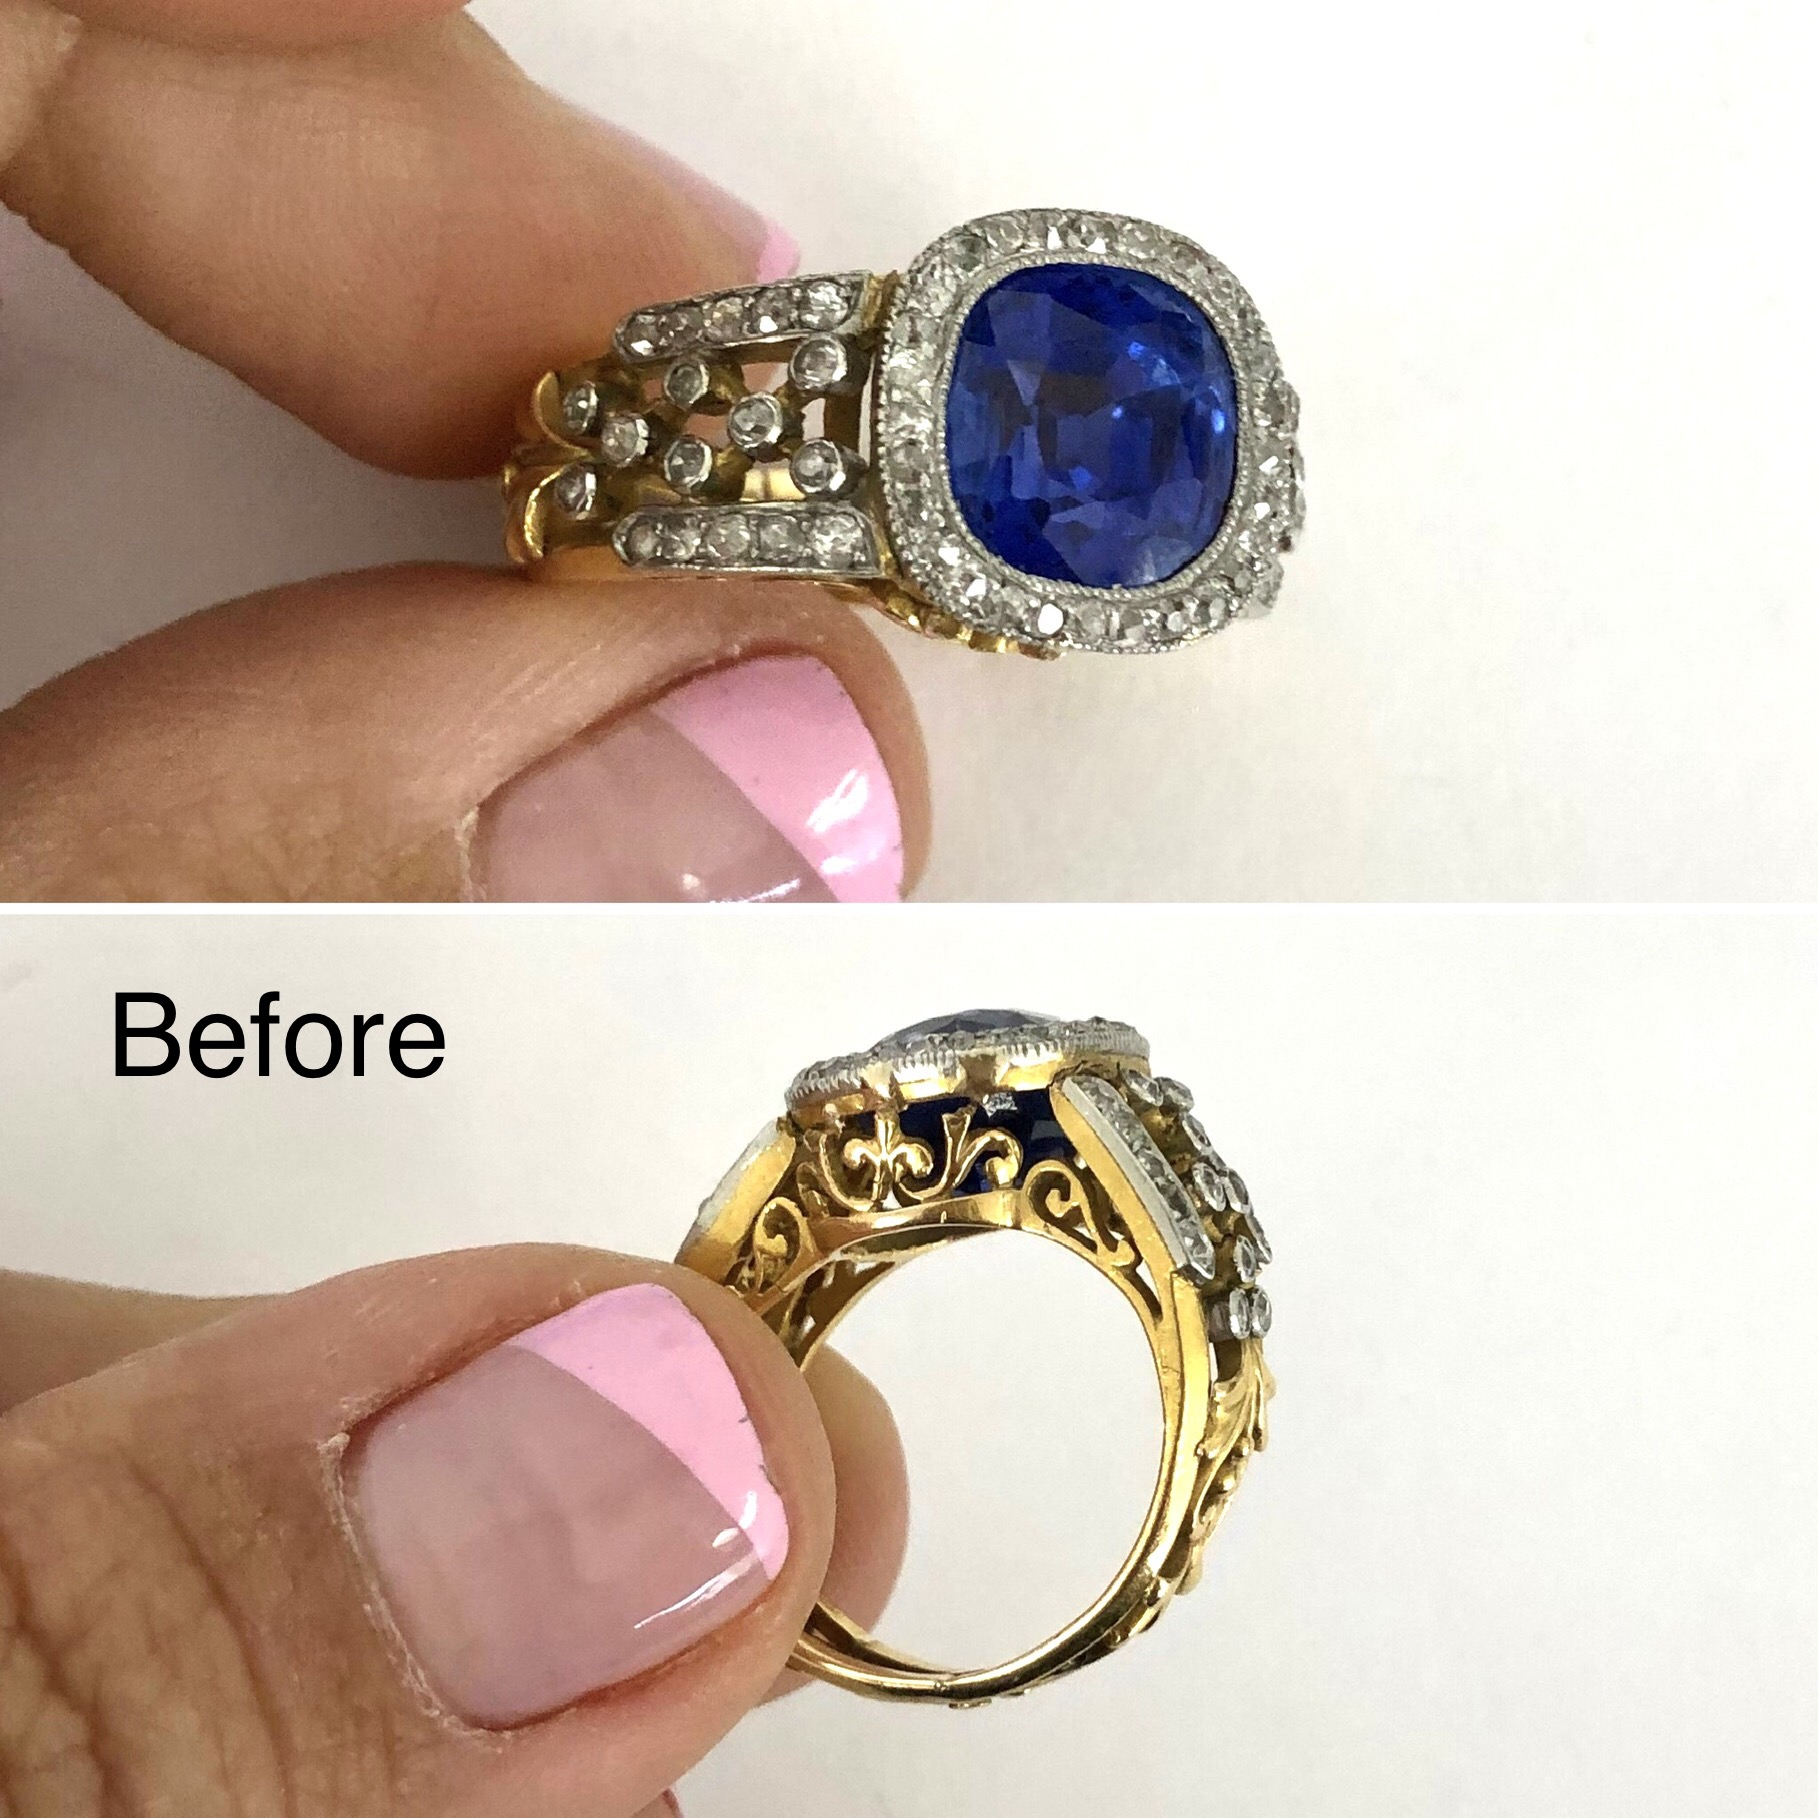 Antique Sapphire Ring Restoration